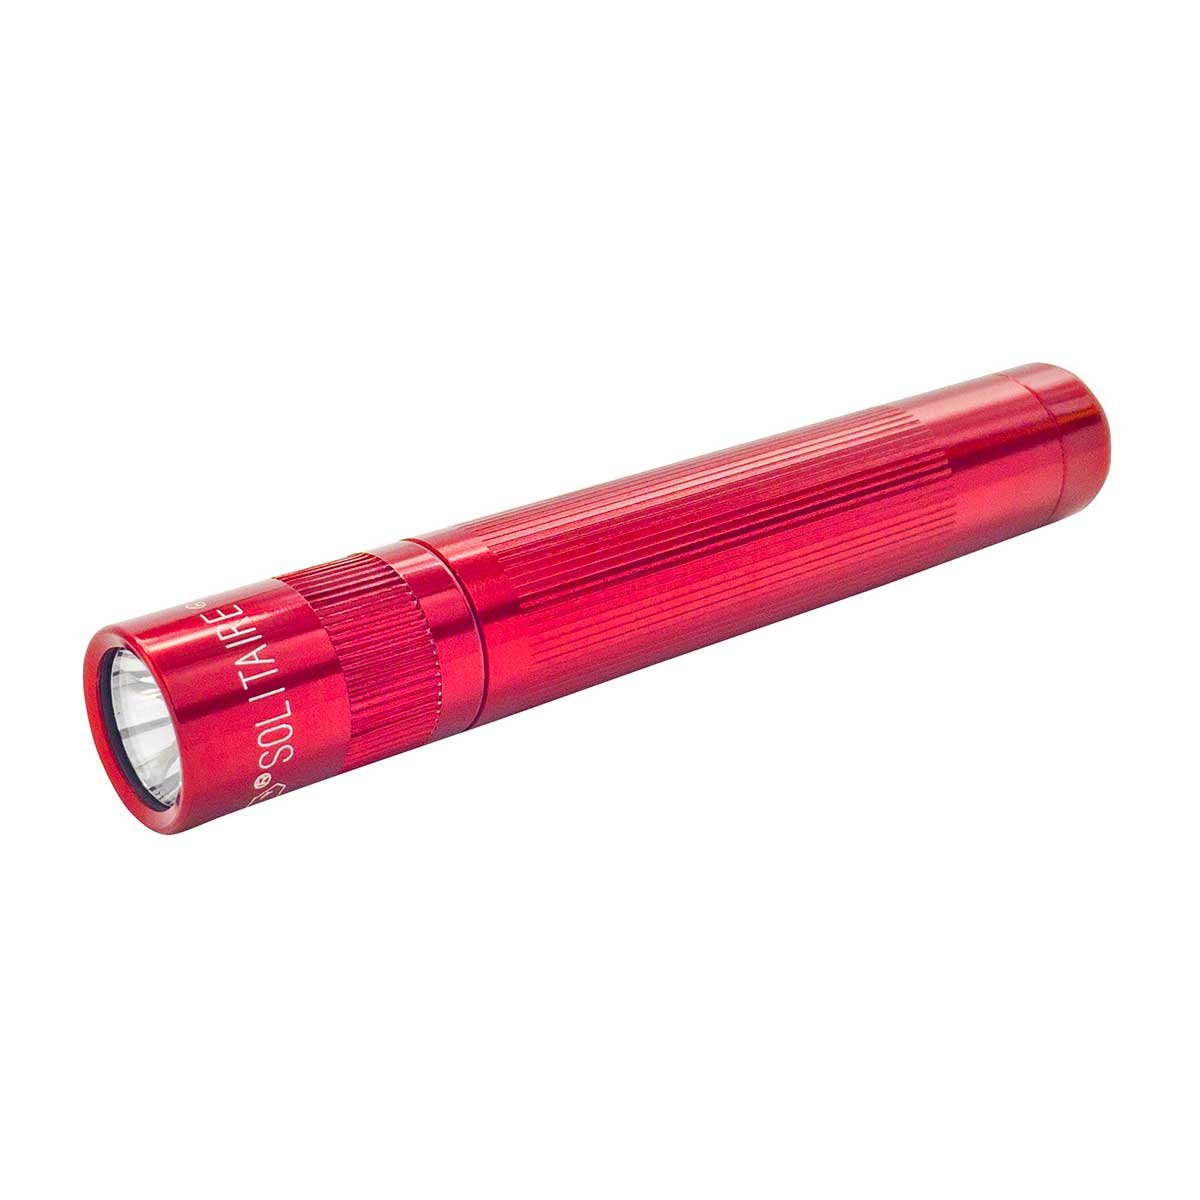 Maglite Solitaire LED roja